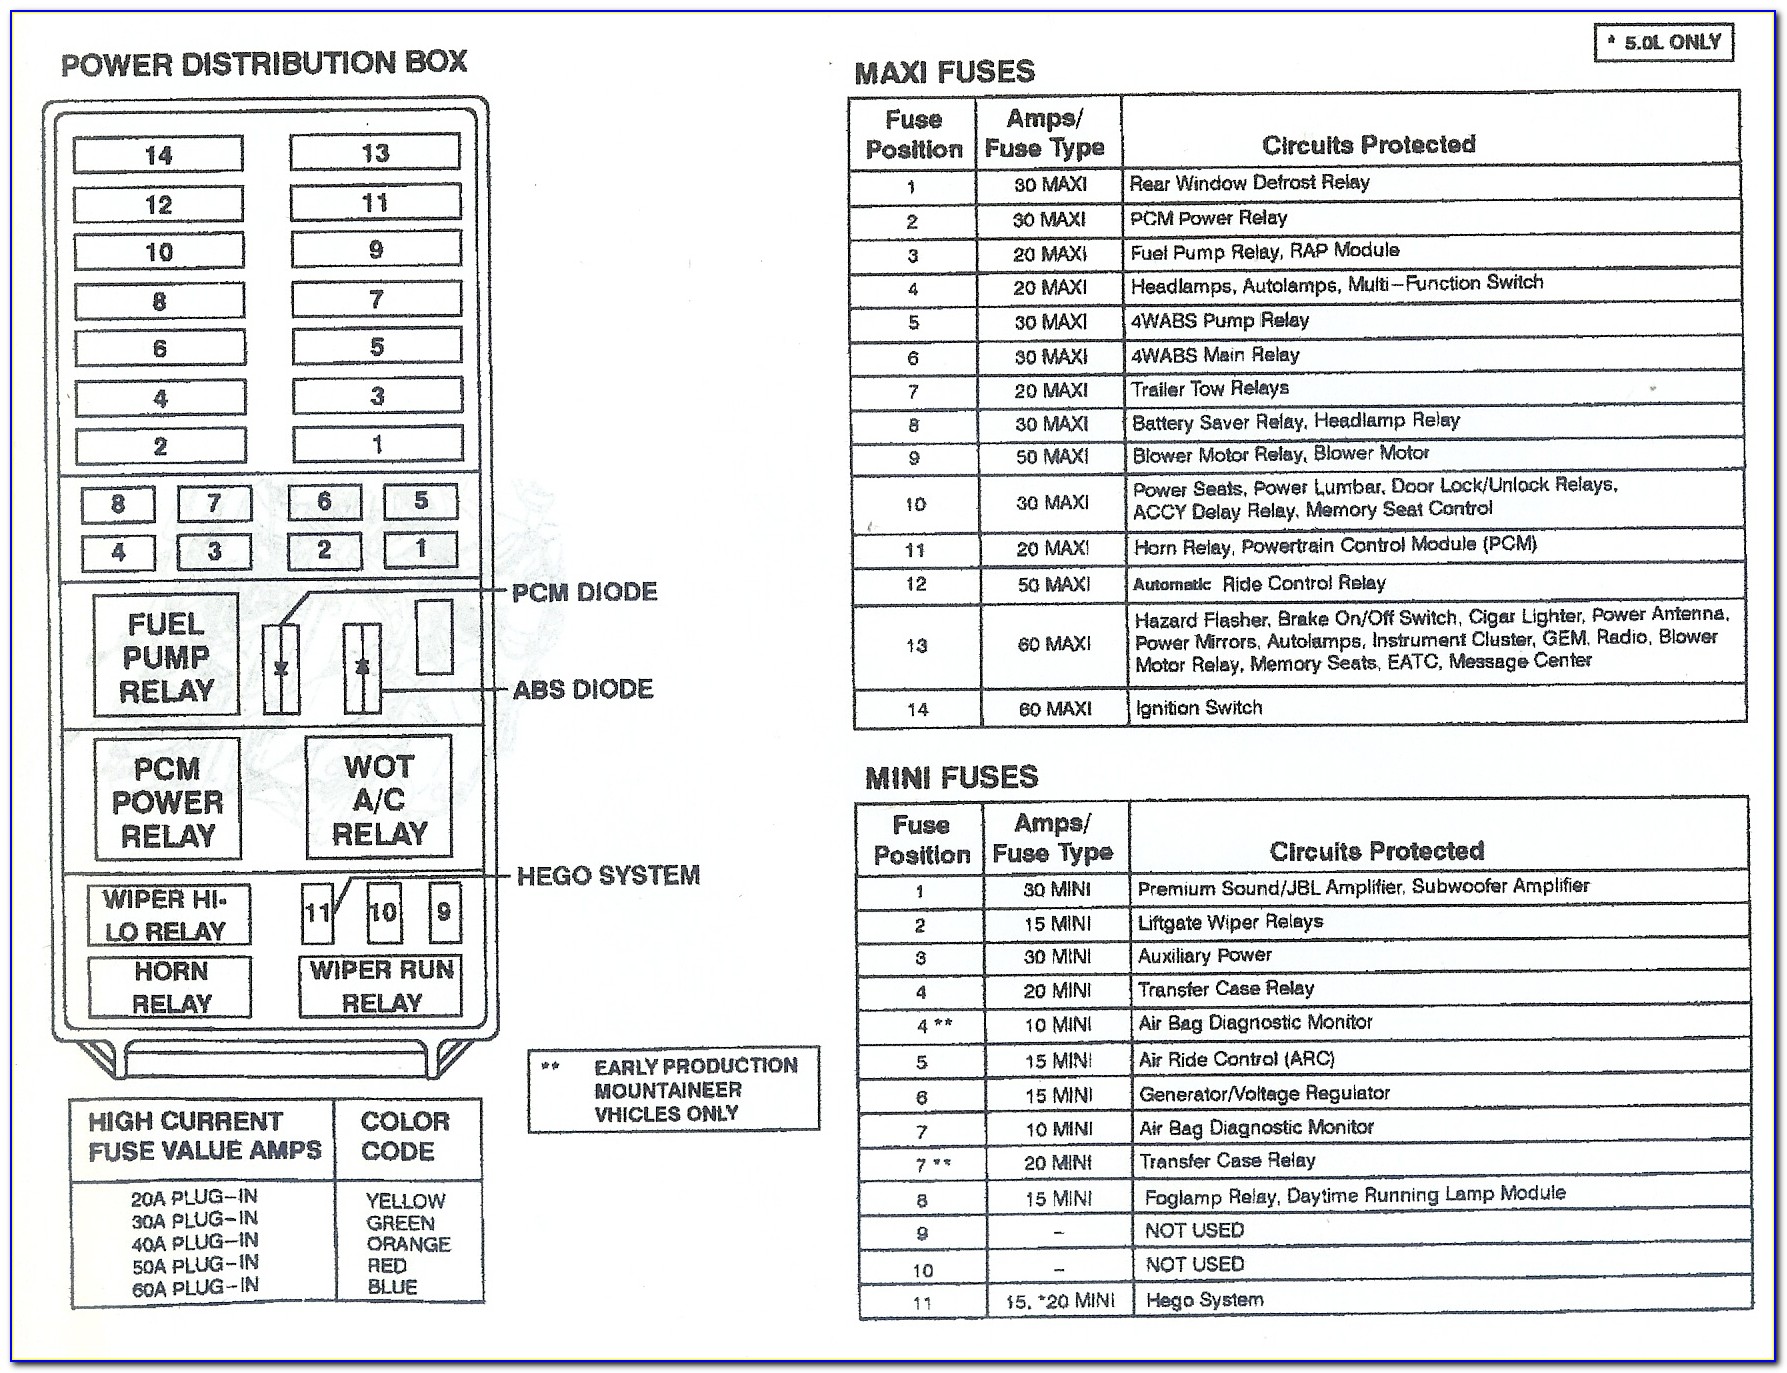 1998 Ford Explorer 4.0 Fuse Box Diagram